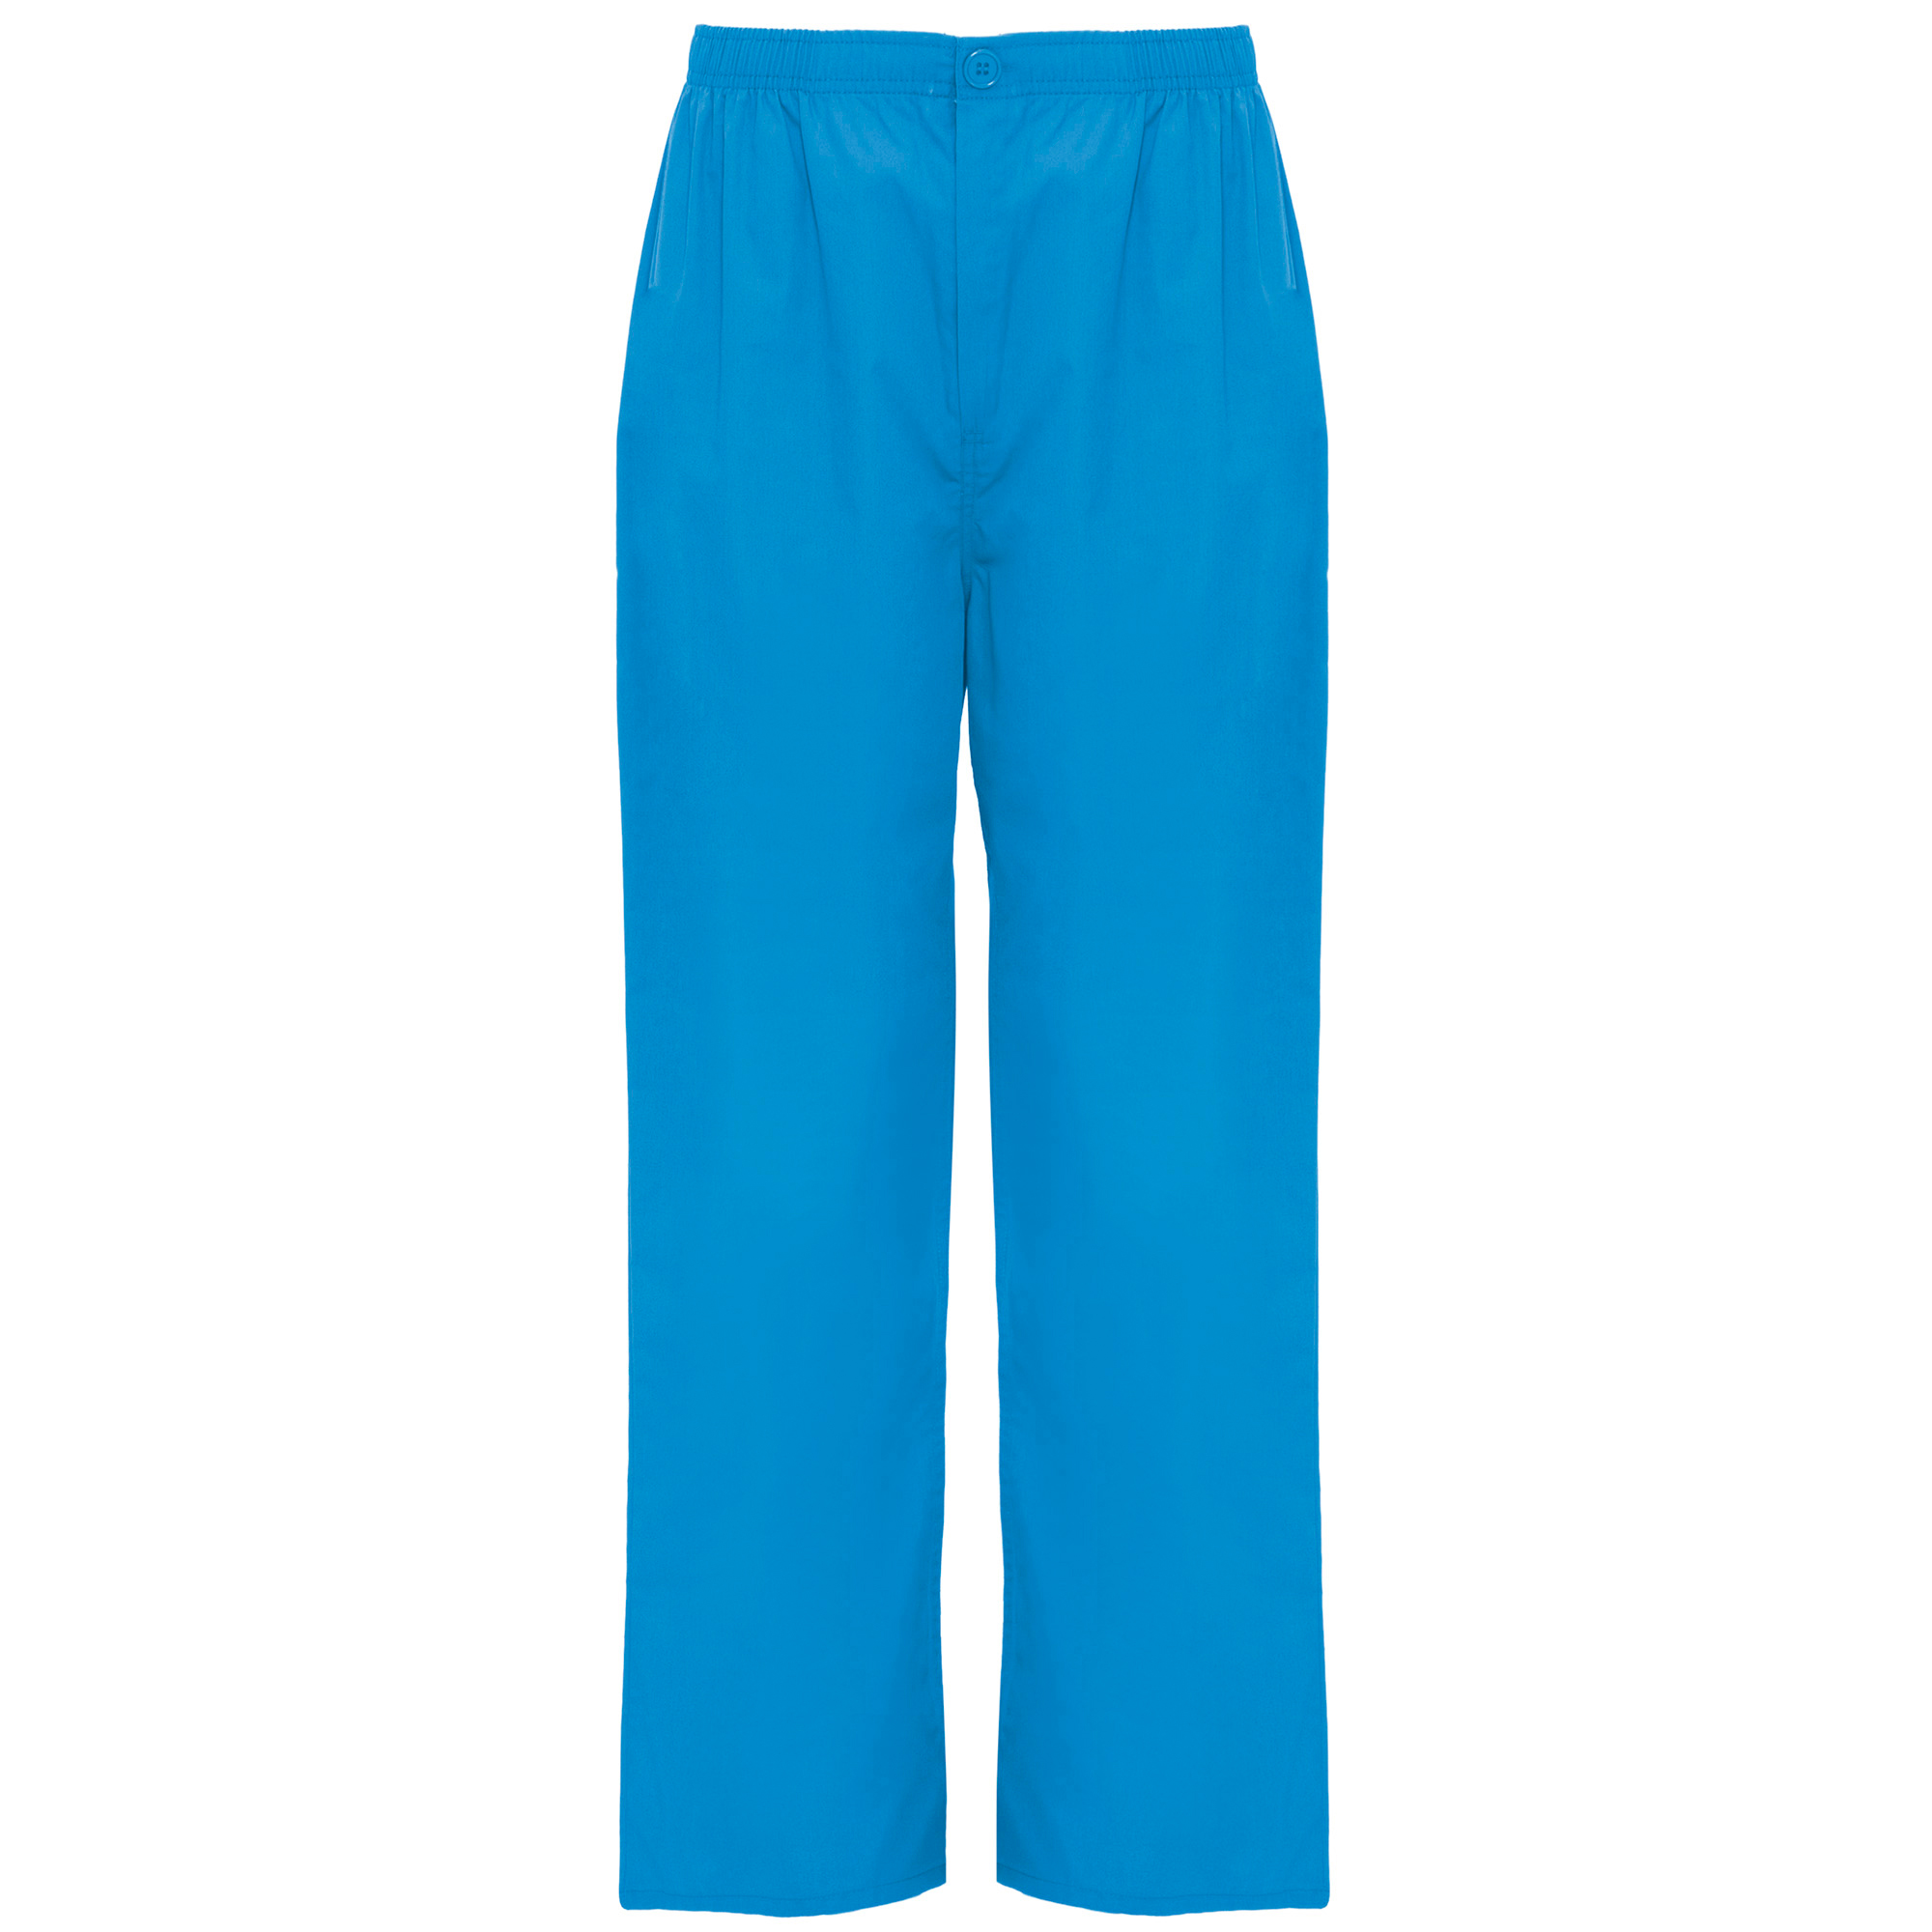 r9097-roly-vademecum-pantaloni-unisex-azzurro-danubio.jpg